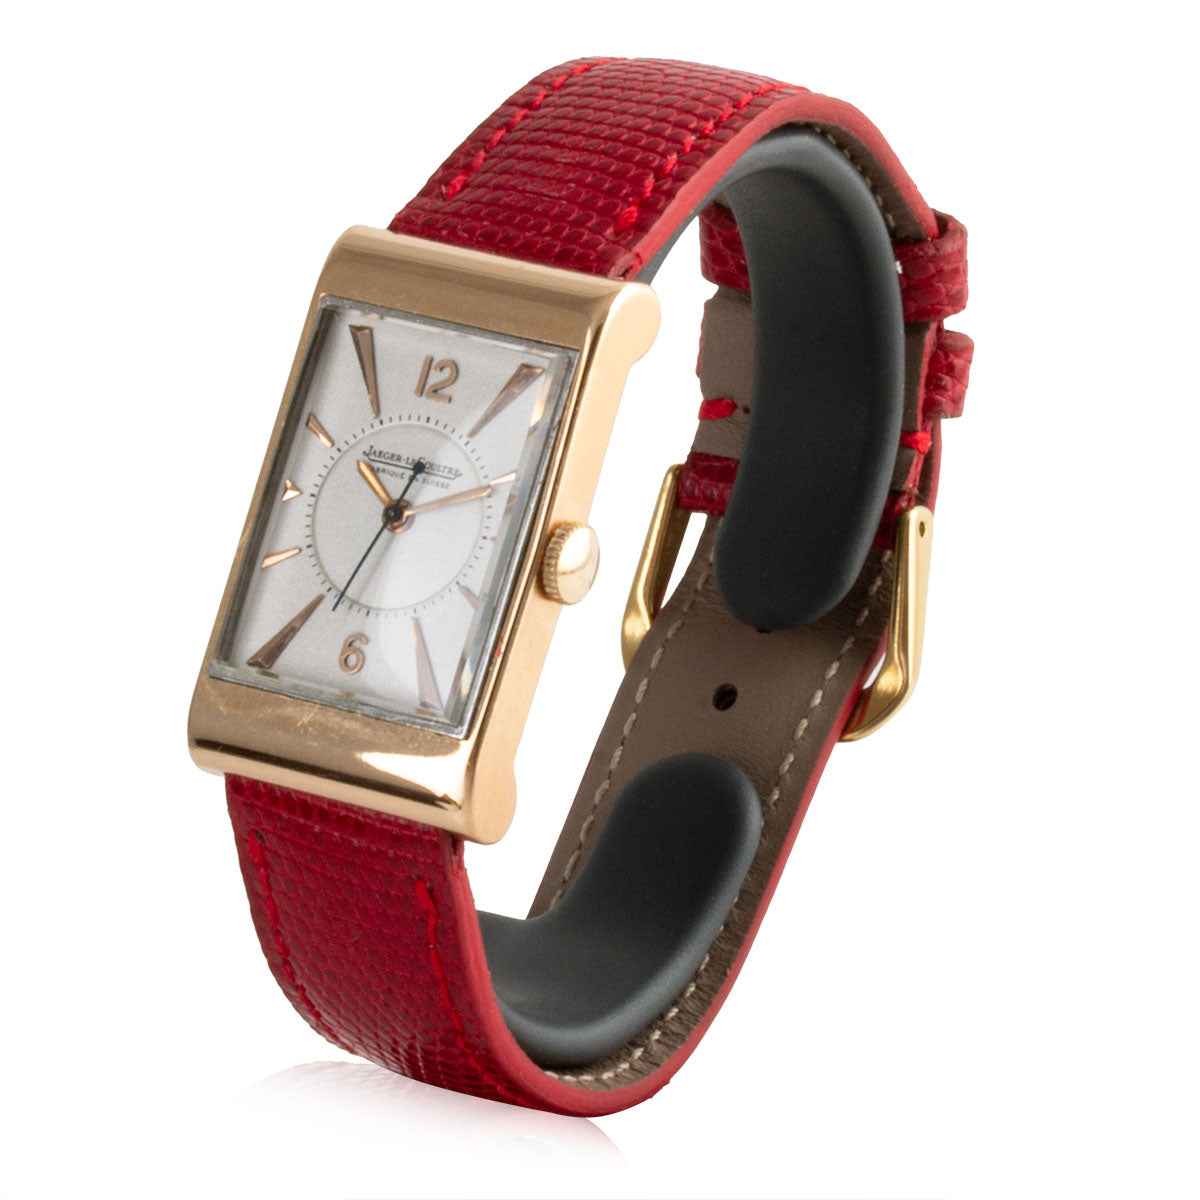 Second-hand watch - Jaeger Lecoultre - Art Deco - 2600€